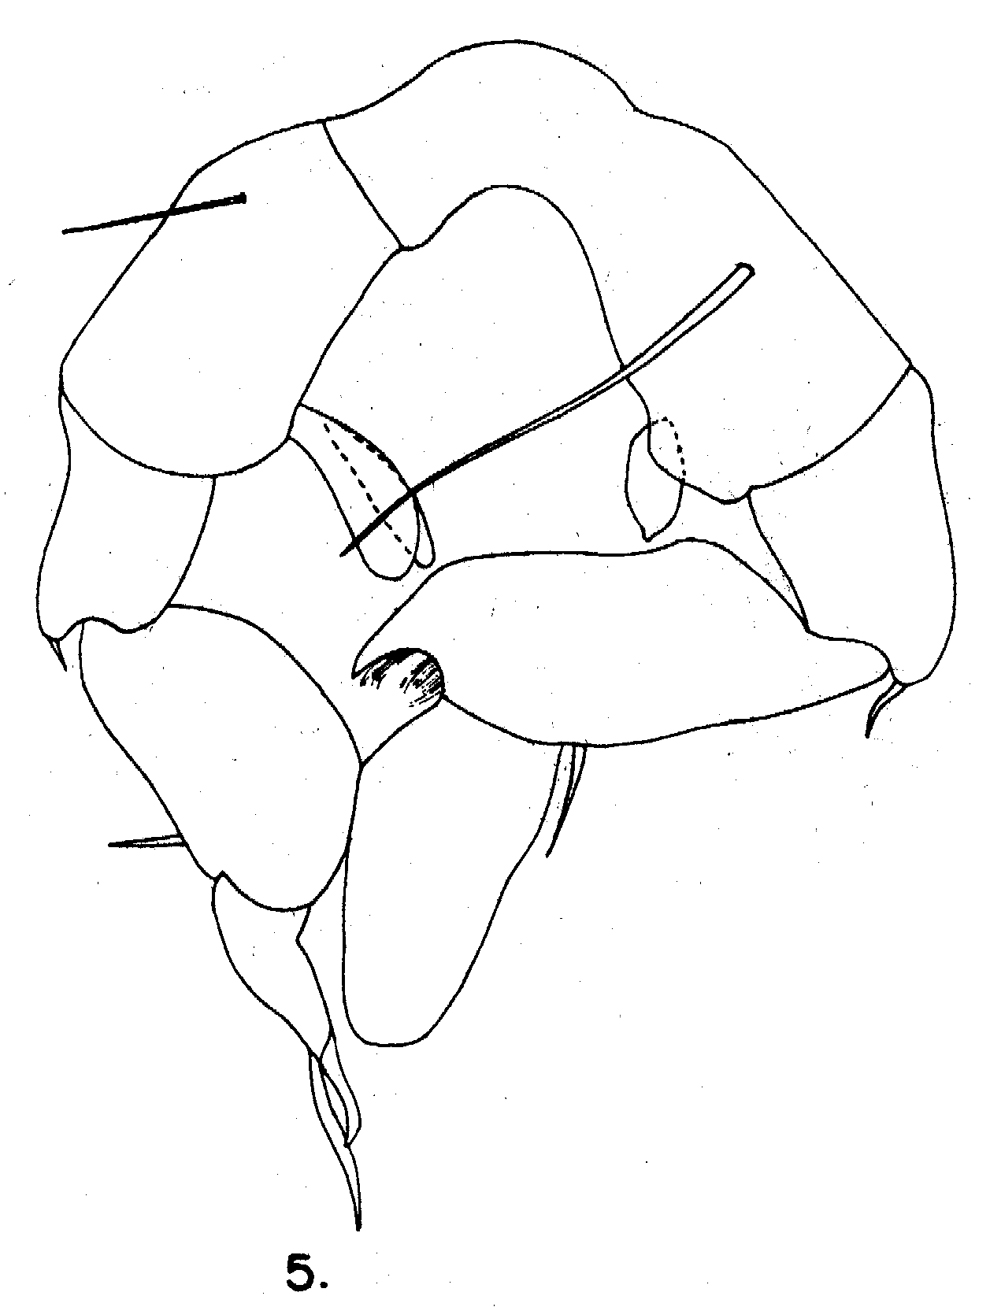 Species Arietellus giesbrechti - Plate 3 of morphological figures